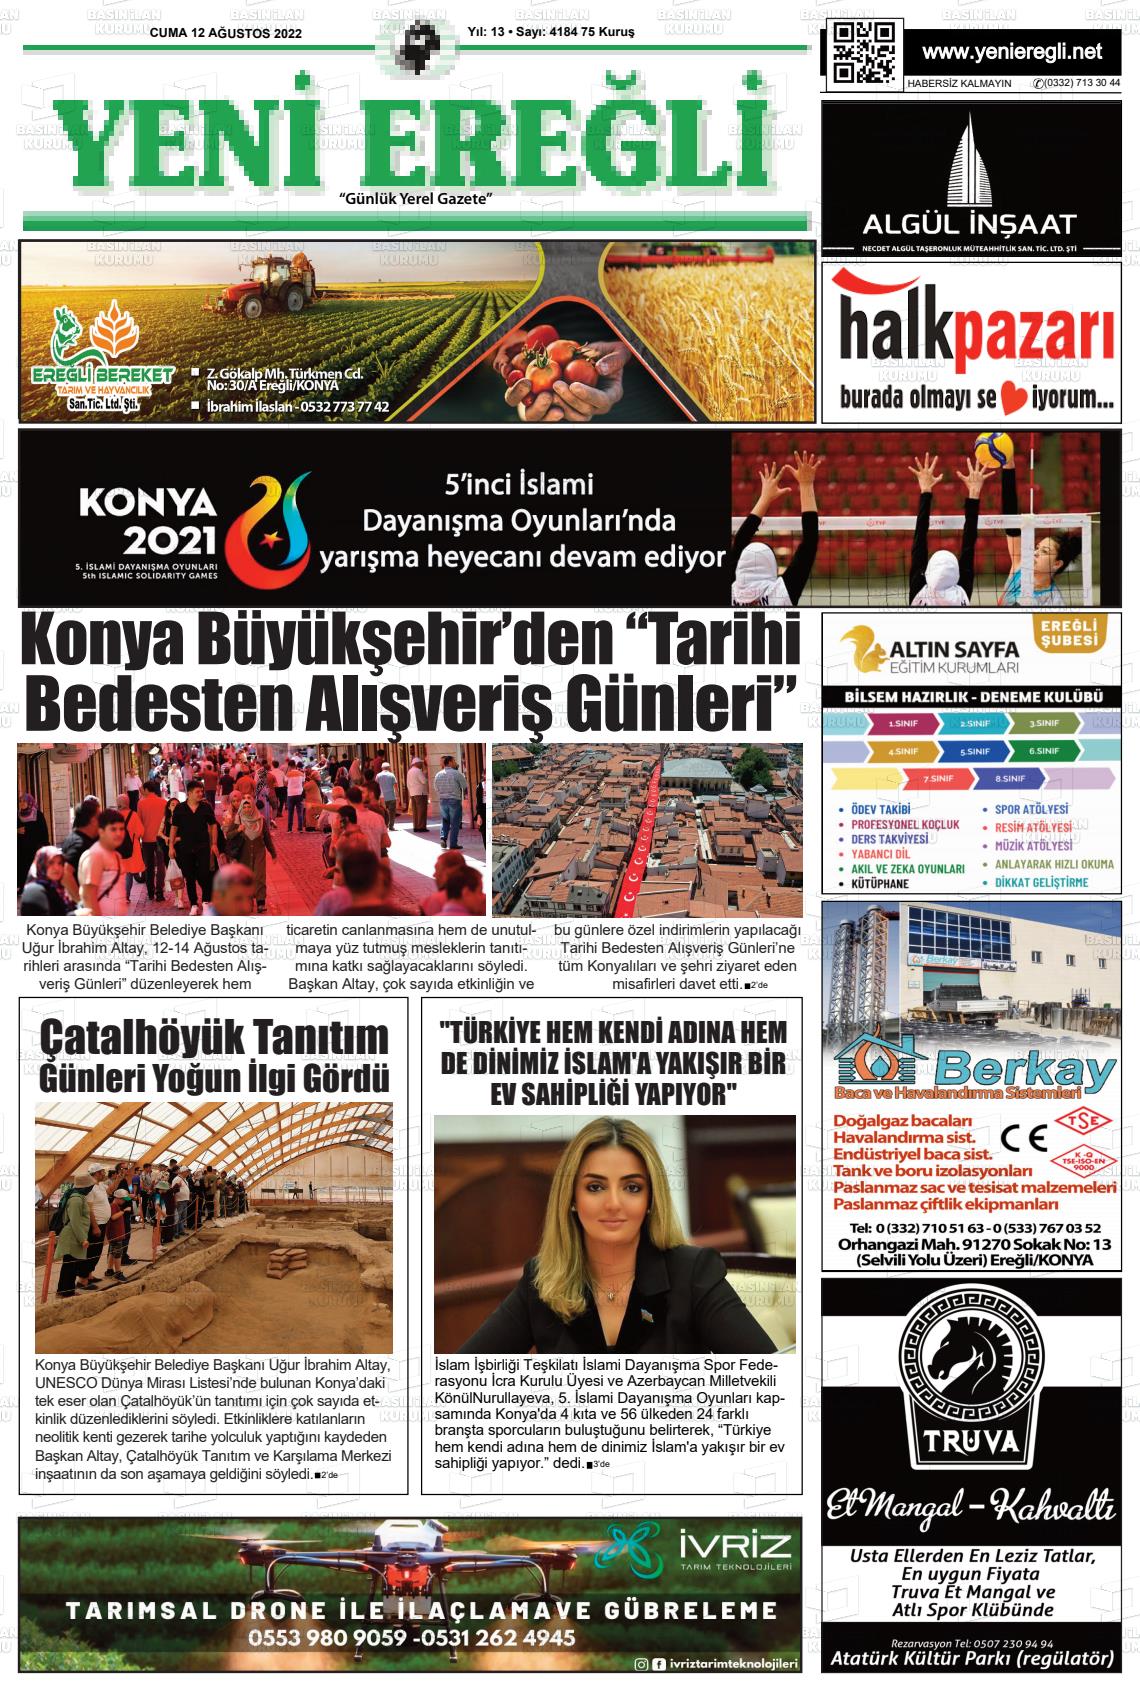 12 Ağustos 2022 Yeni Ereğli Gazete Manşeti